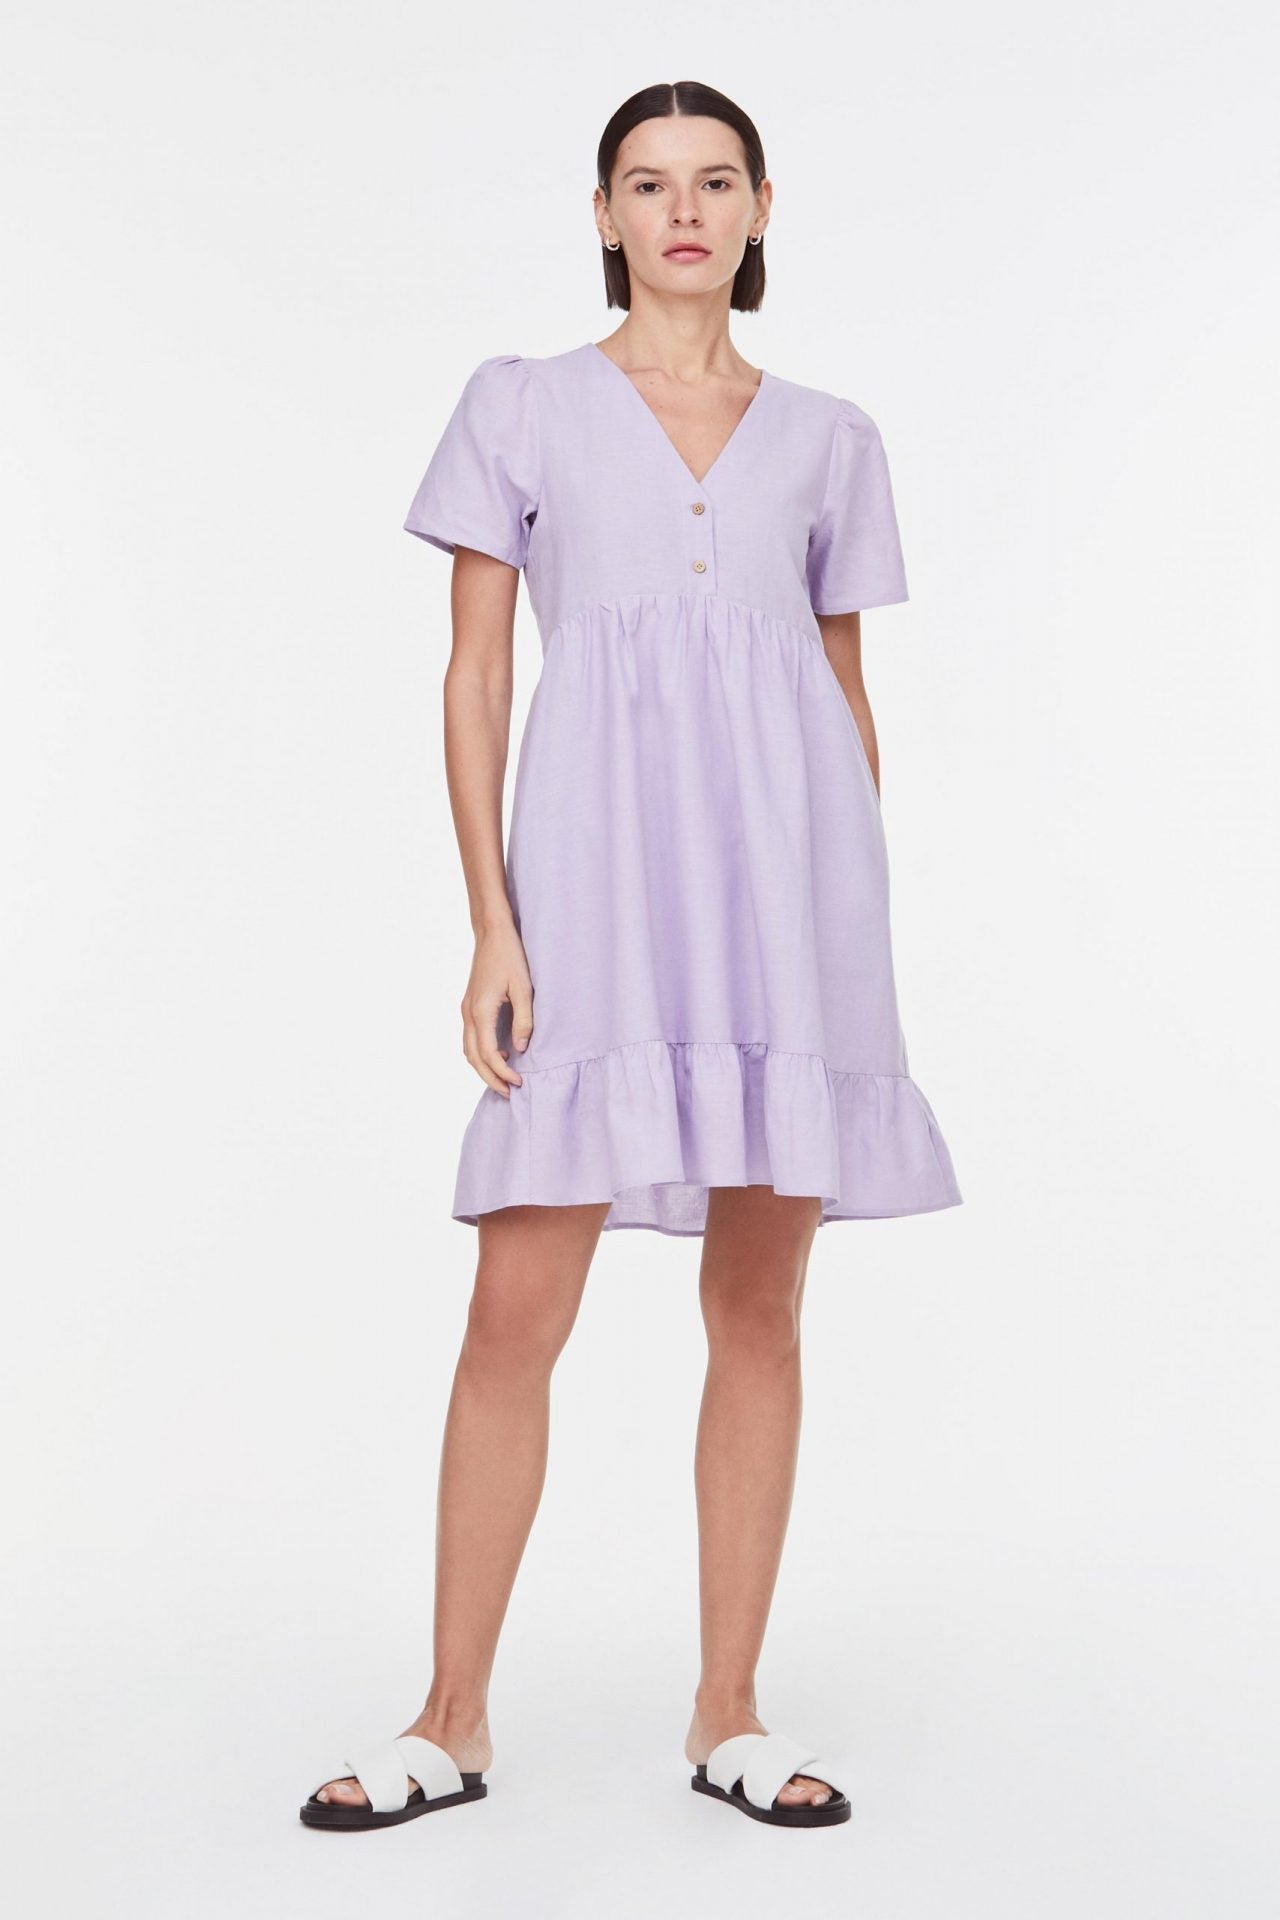 10111 lilac v-neck dress